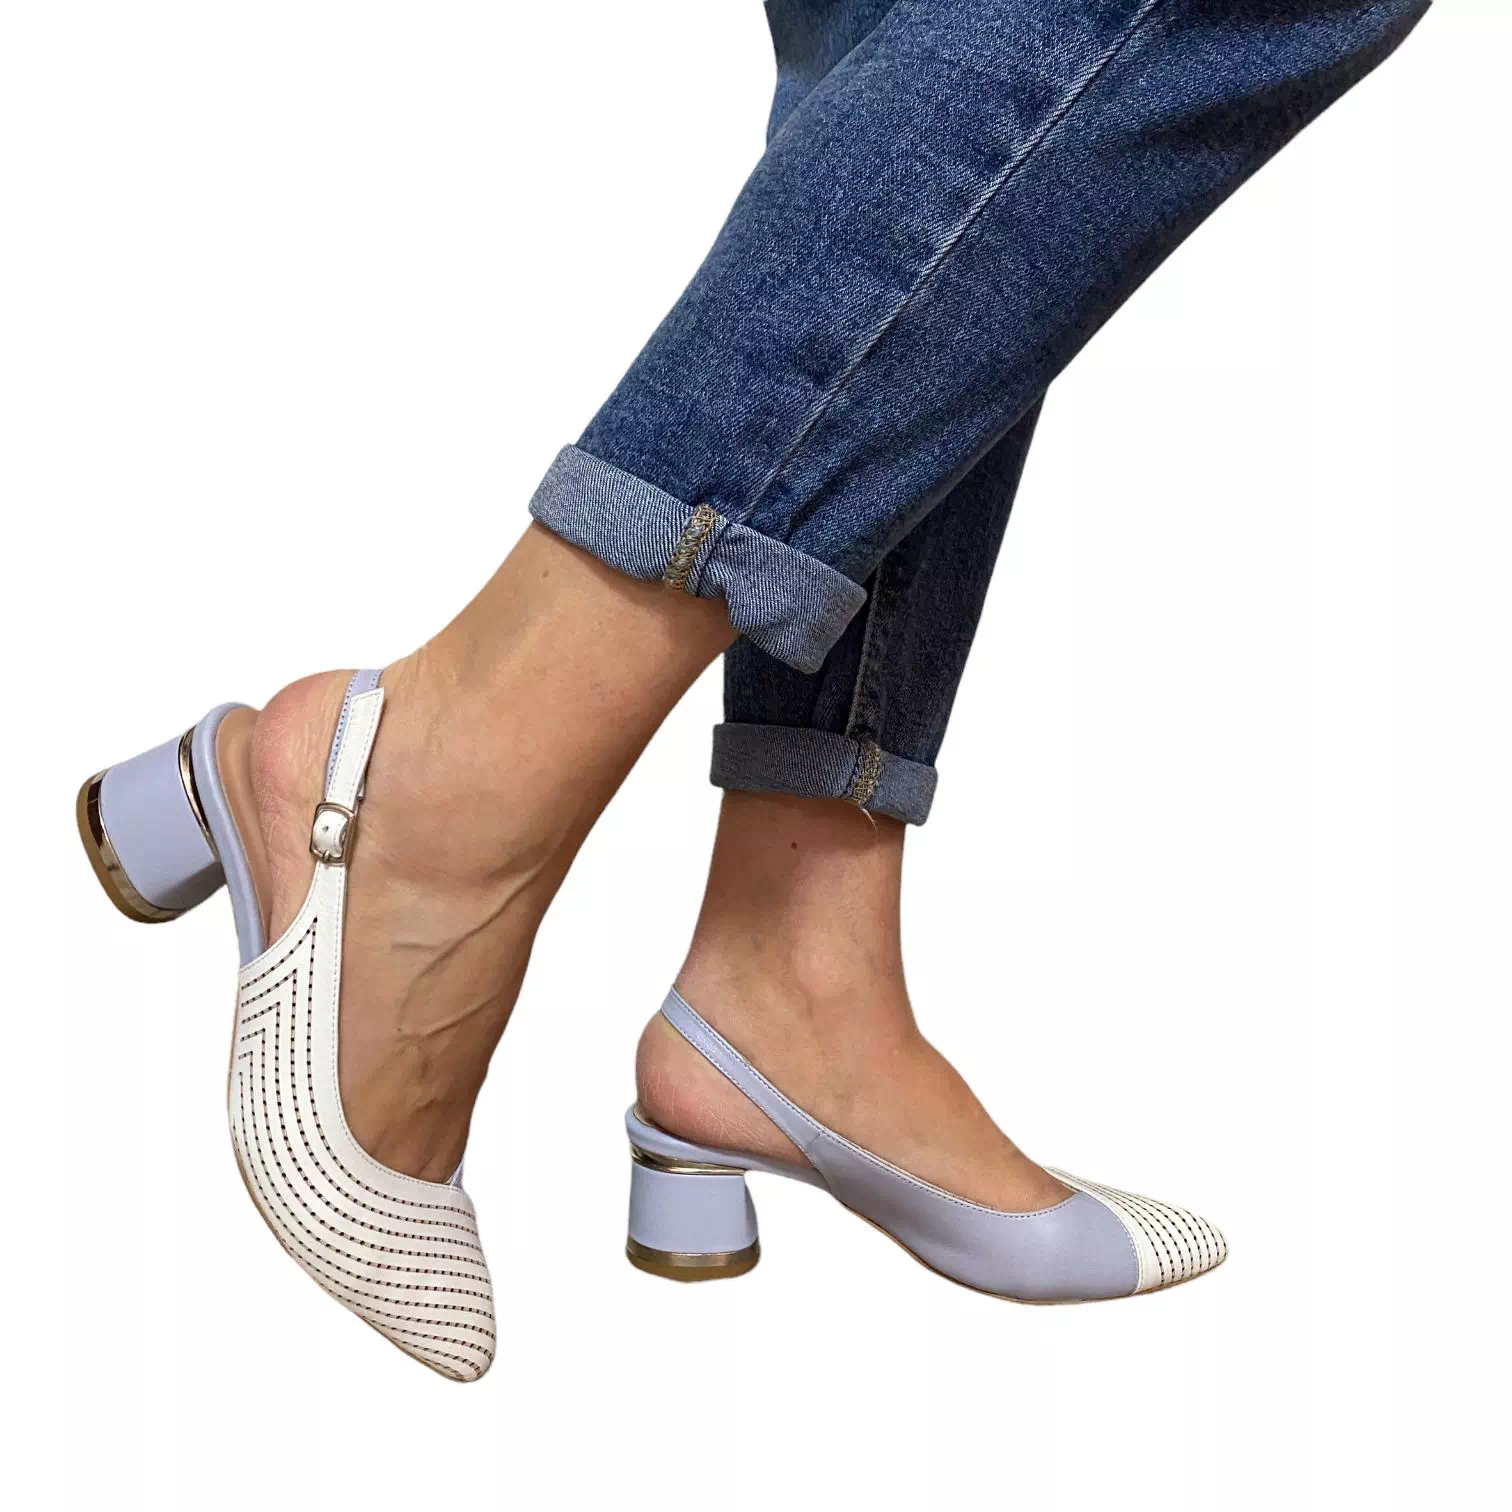 Pantofi Raxela albi combinati cu albastru decupati la spate